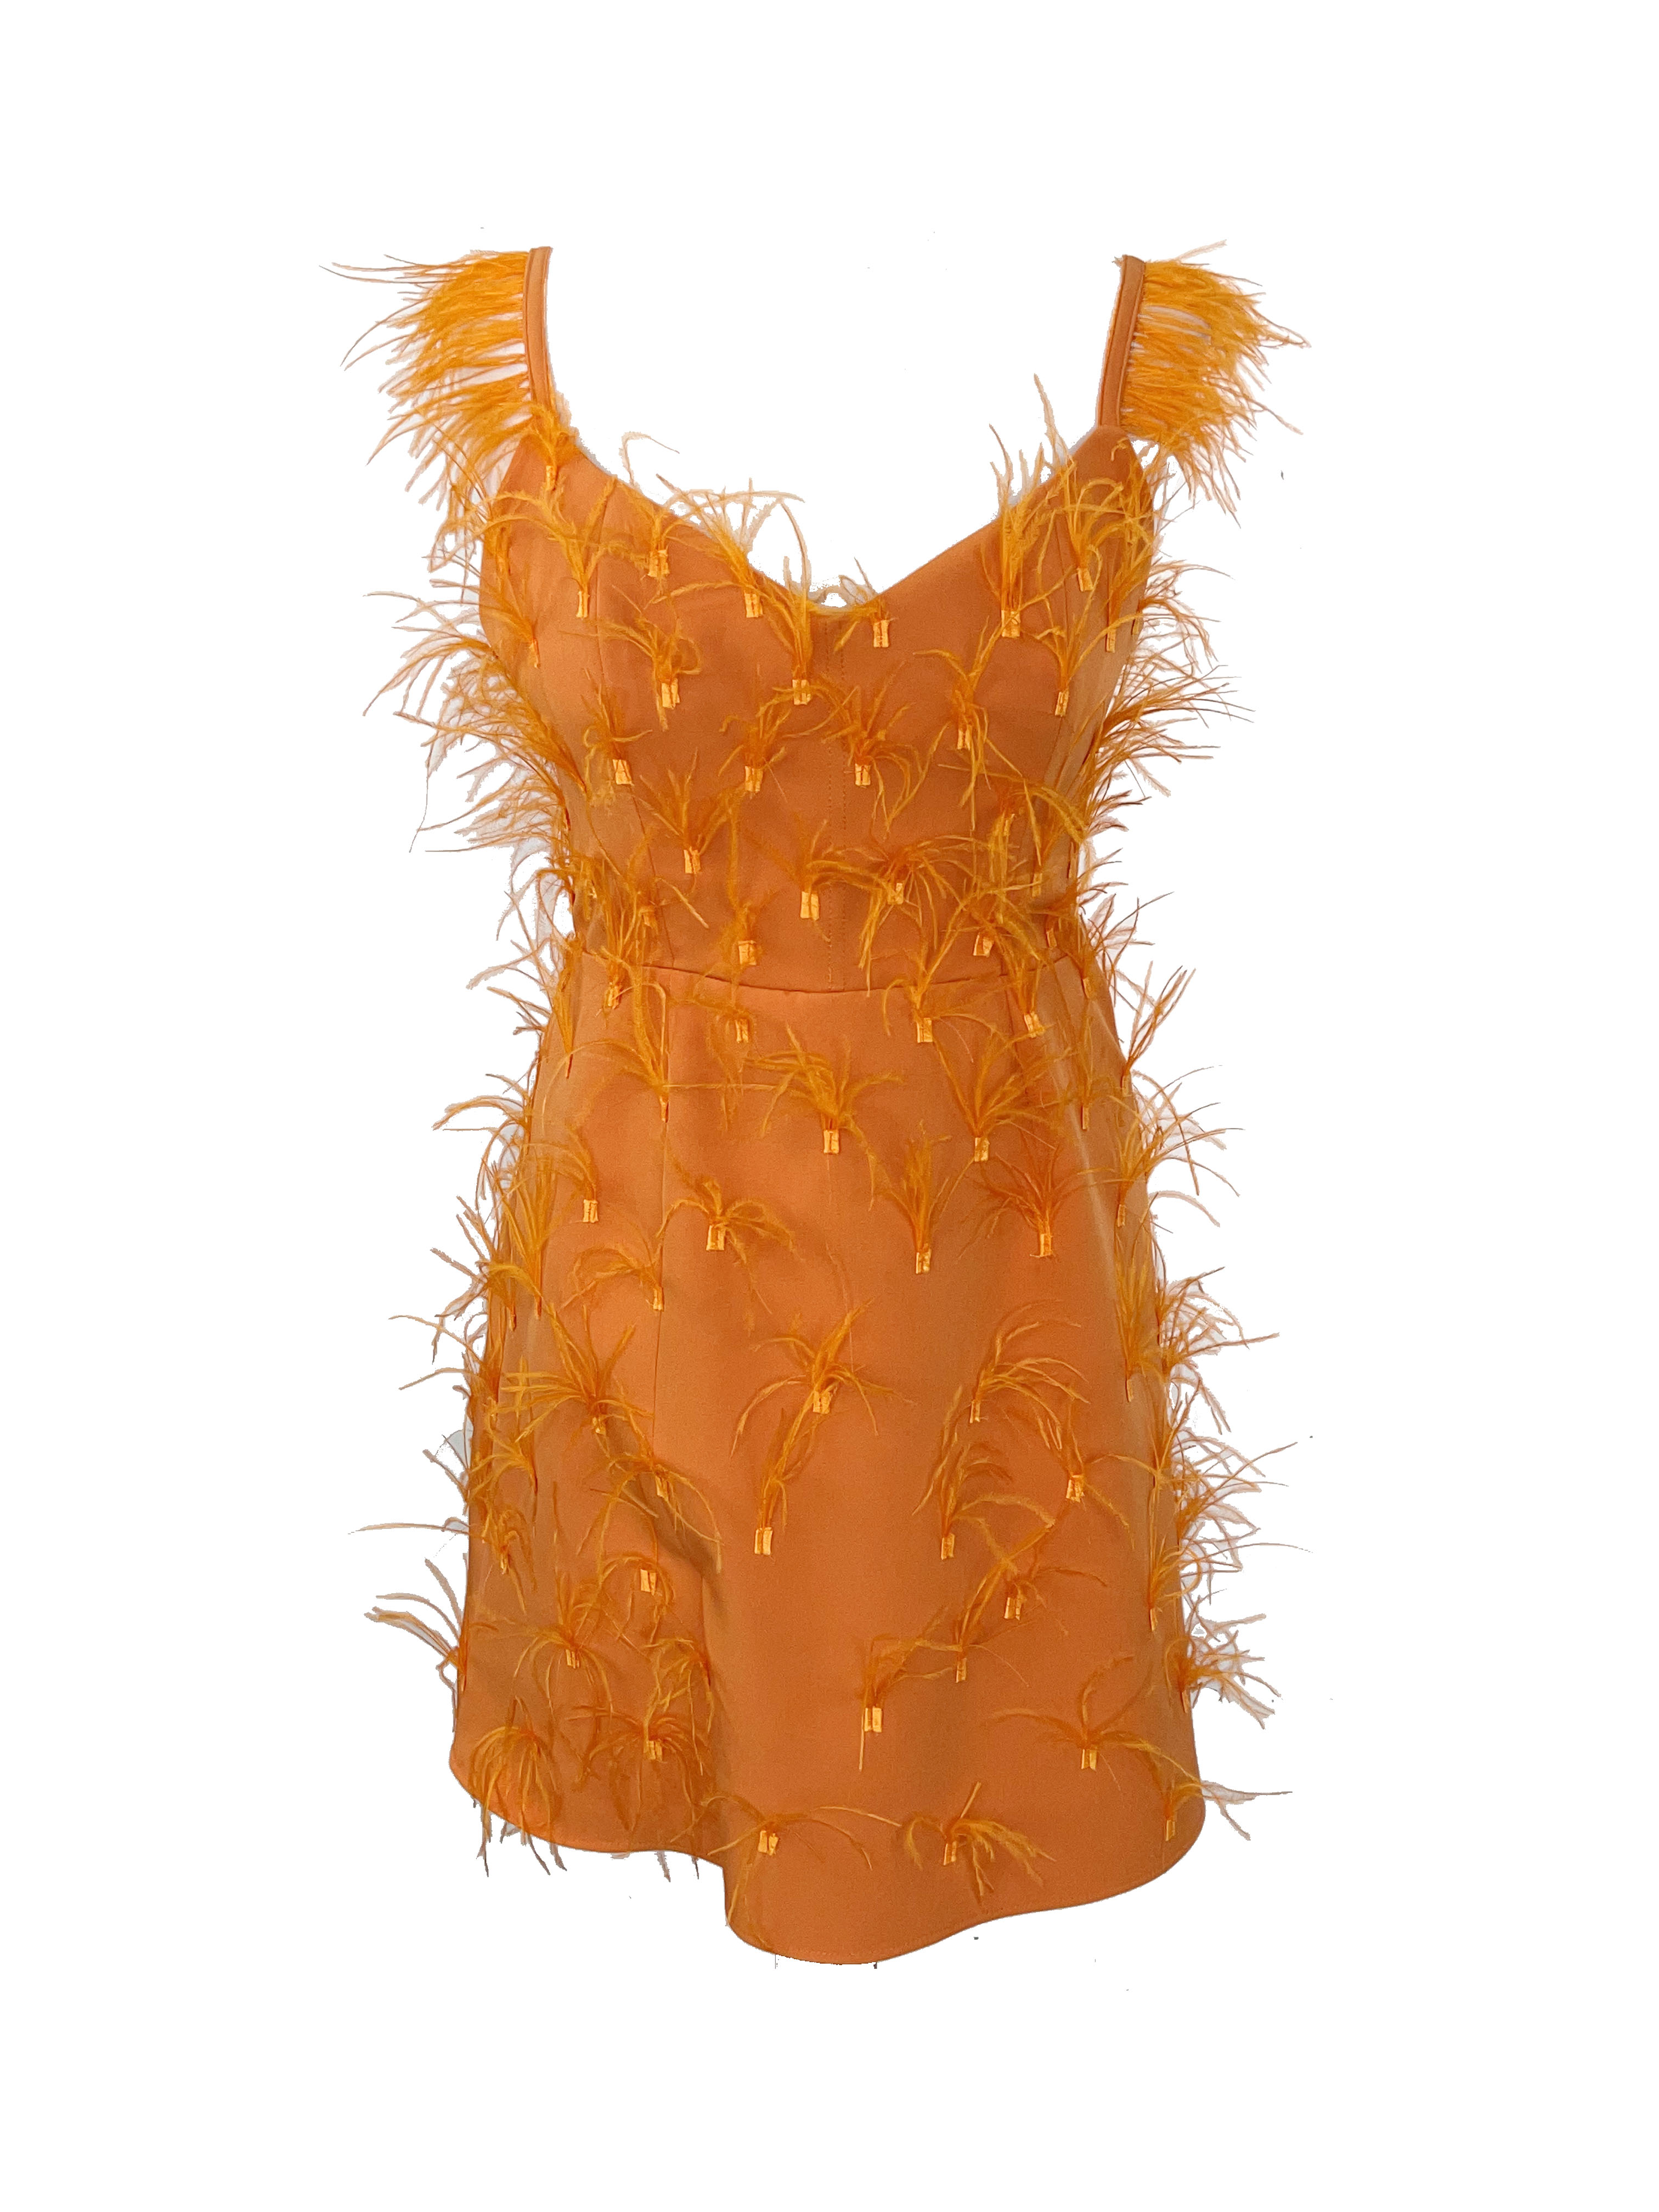 R24106 - ORANGE 01 - OLYMPIA orange mini dress with feathers - AMBAR STUDIO